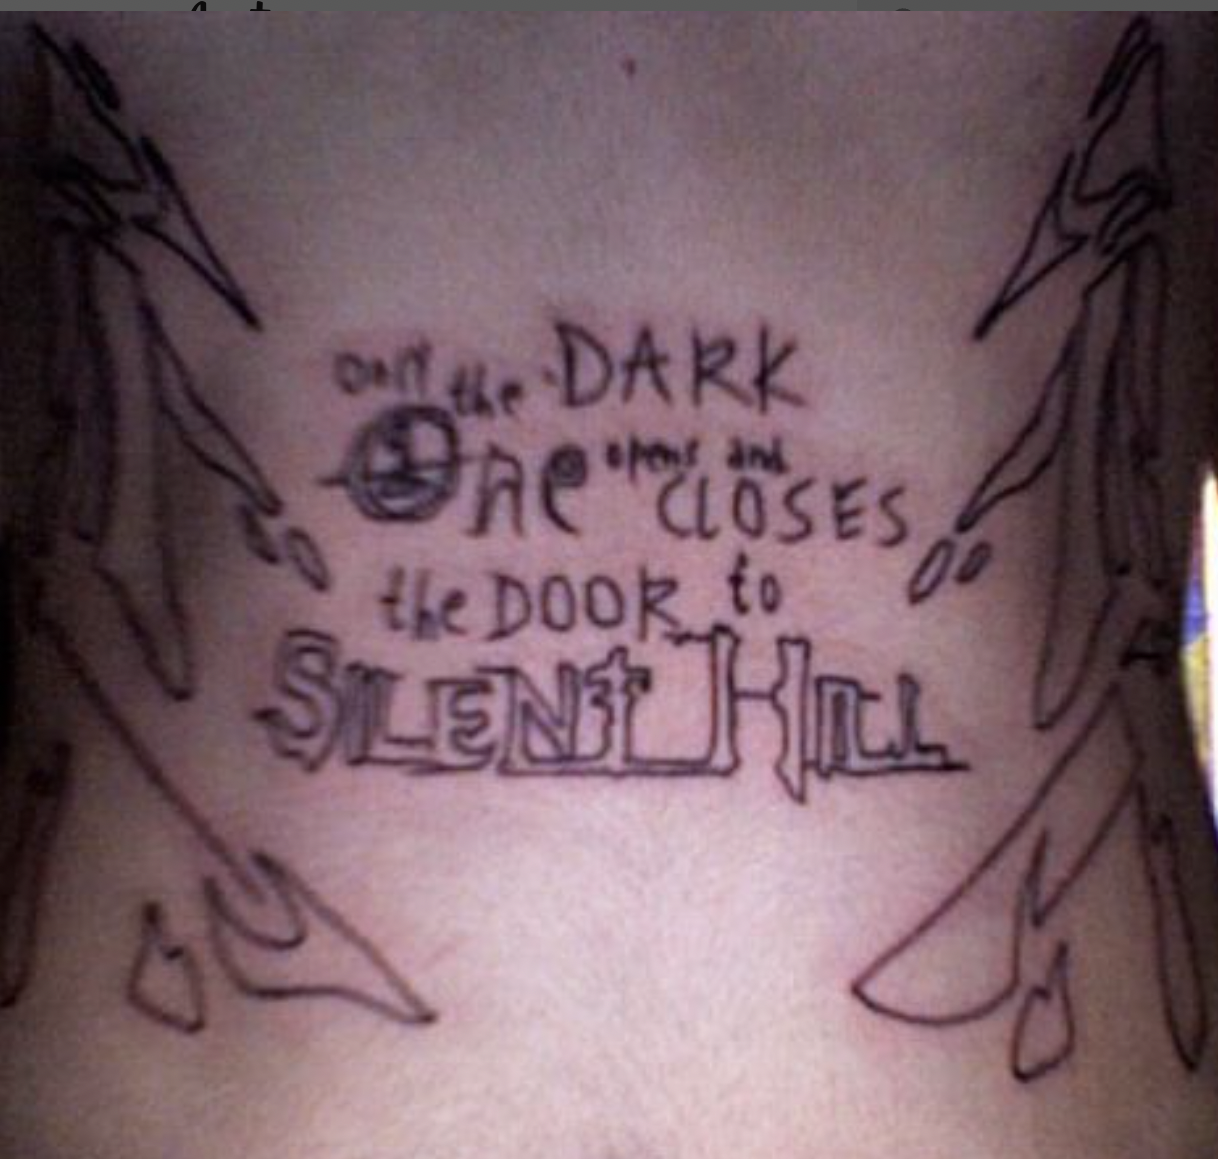 Bad Tattoos - tattoo - and 4. Dark One Uoses the Dook to oo Slenkel ga